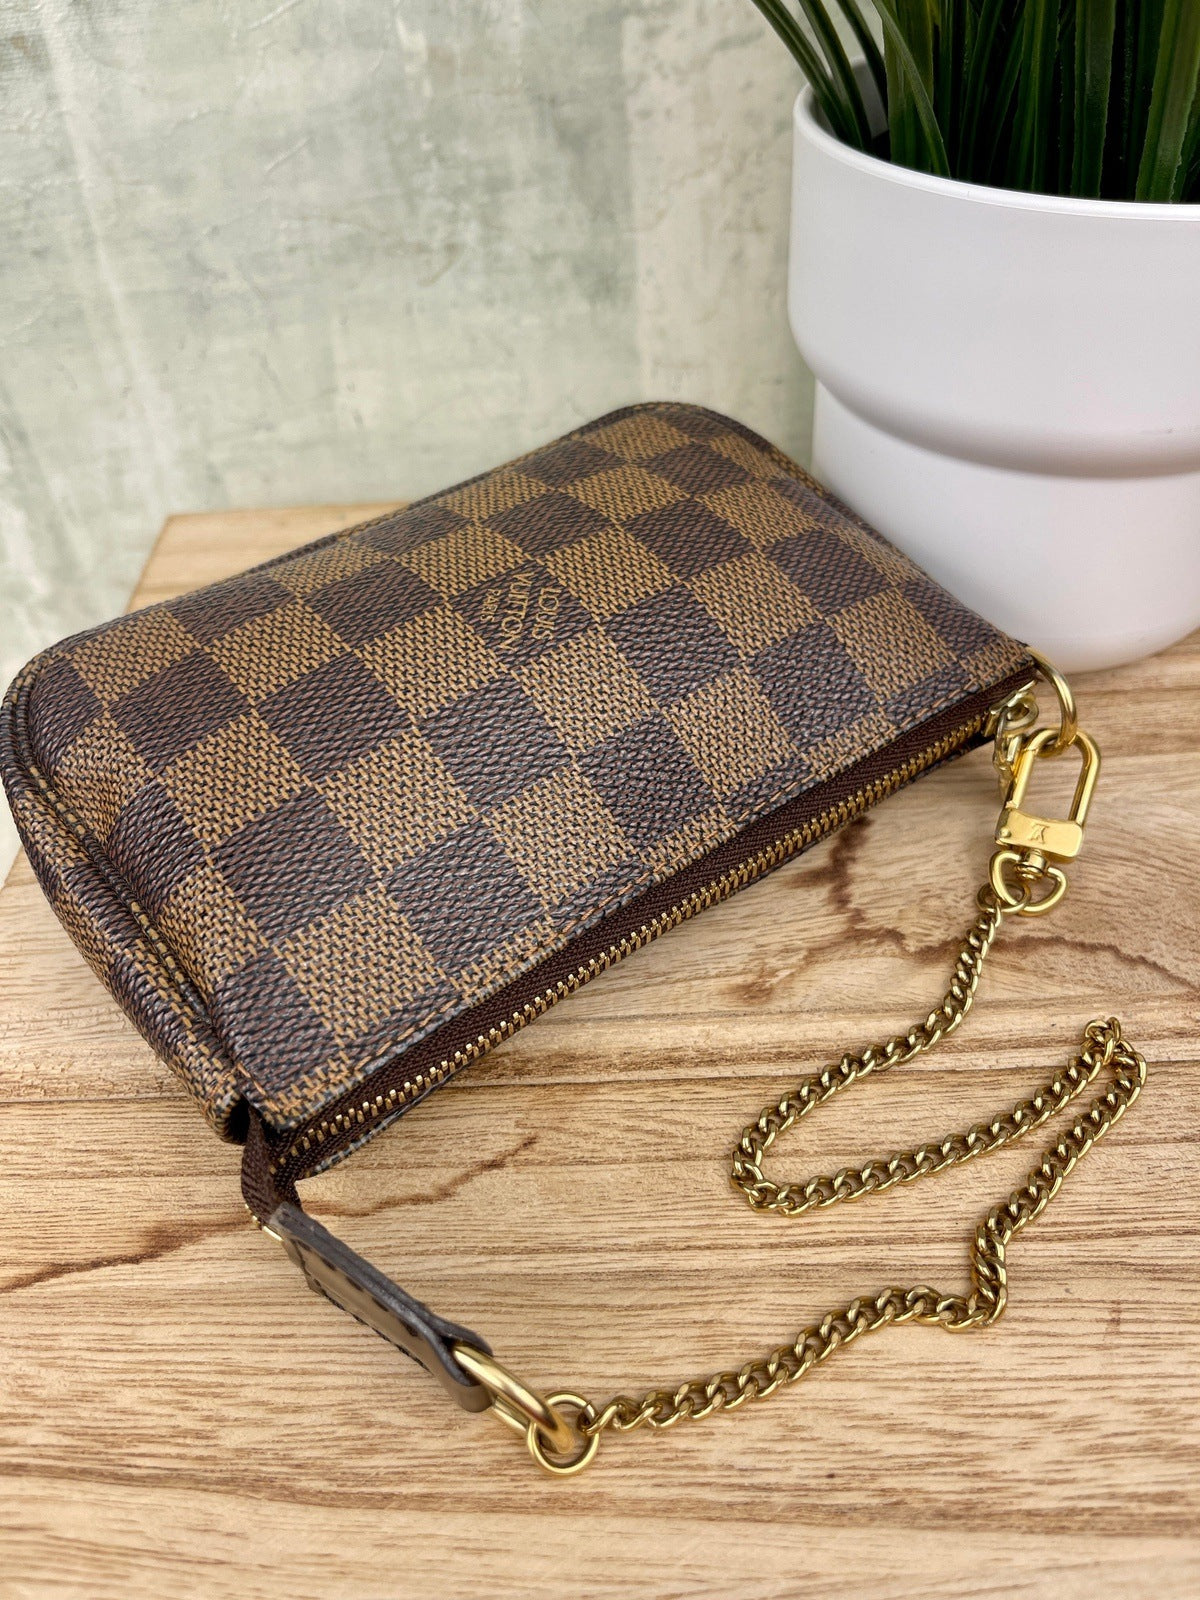 Louis Vuitton Damier Ebene Key Pouch - Brown Bag Accessories